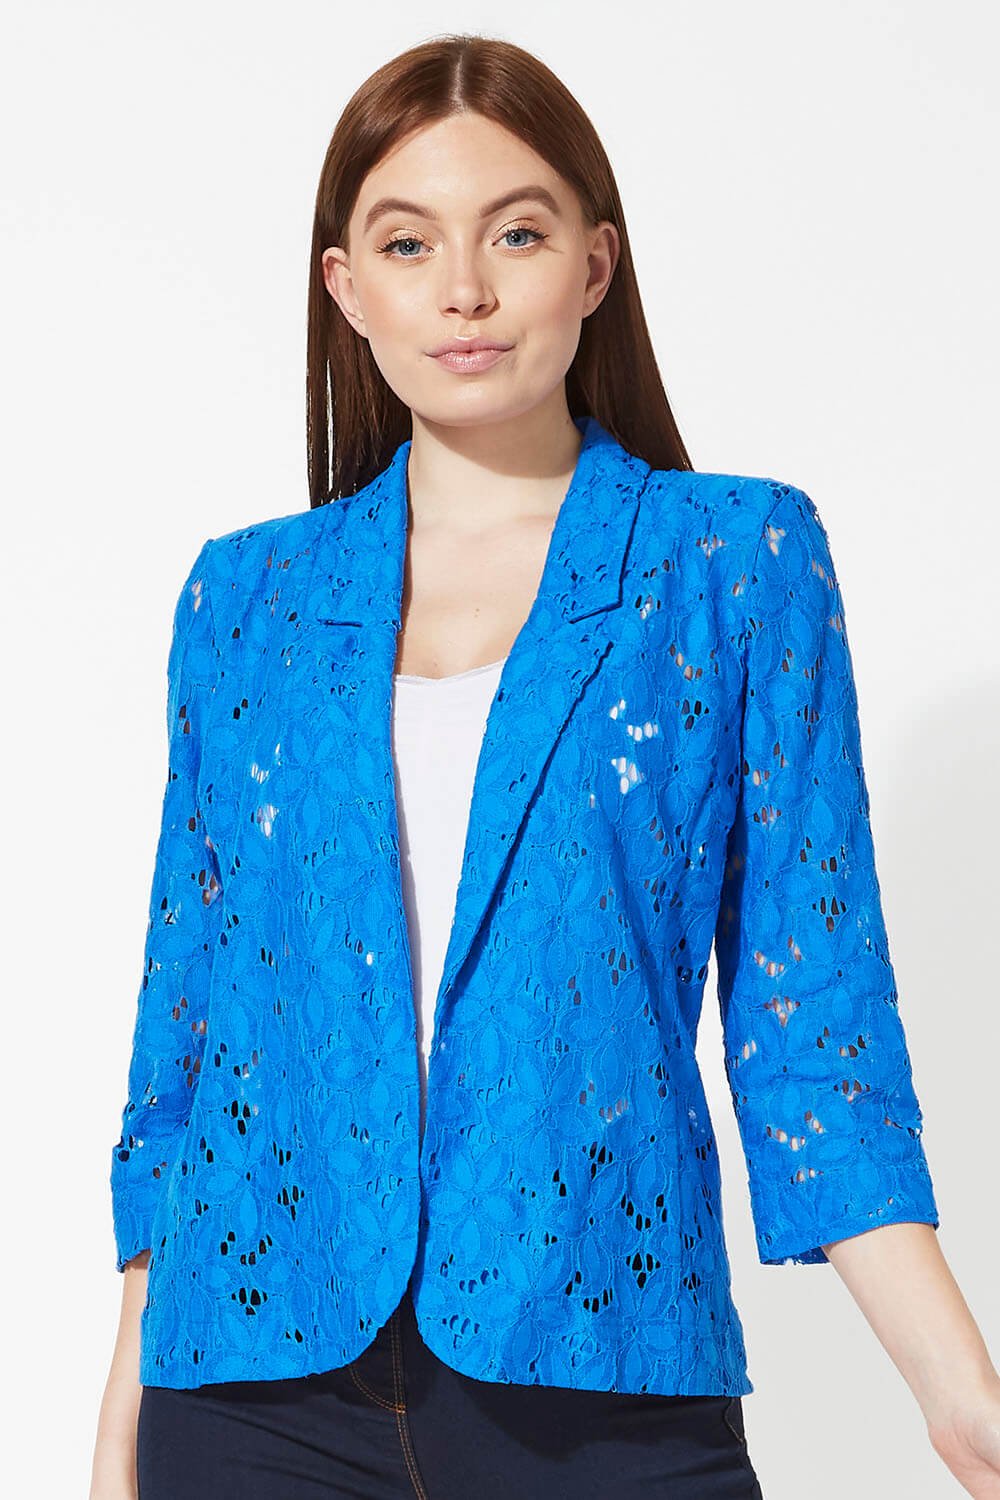 Royal Blue Floral Lace 3/4 Sleeve Jacket, Image 3 of 4